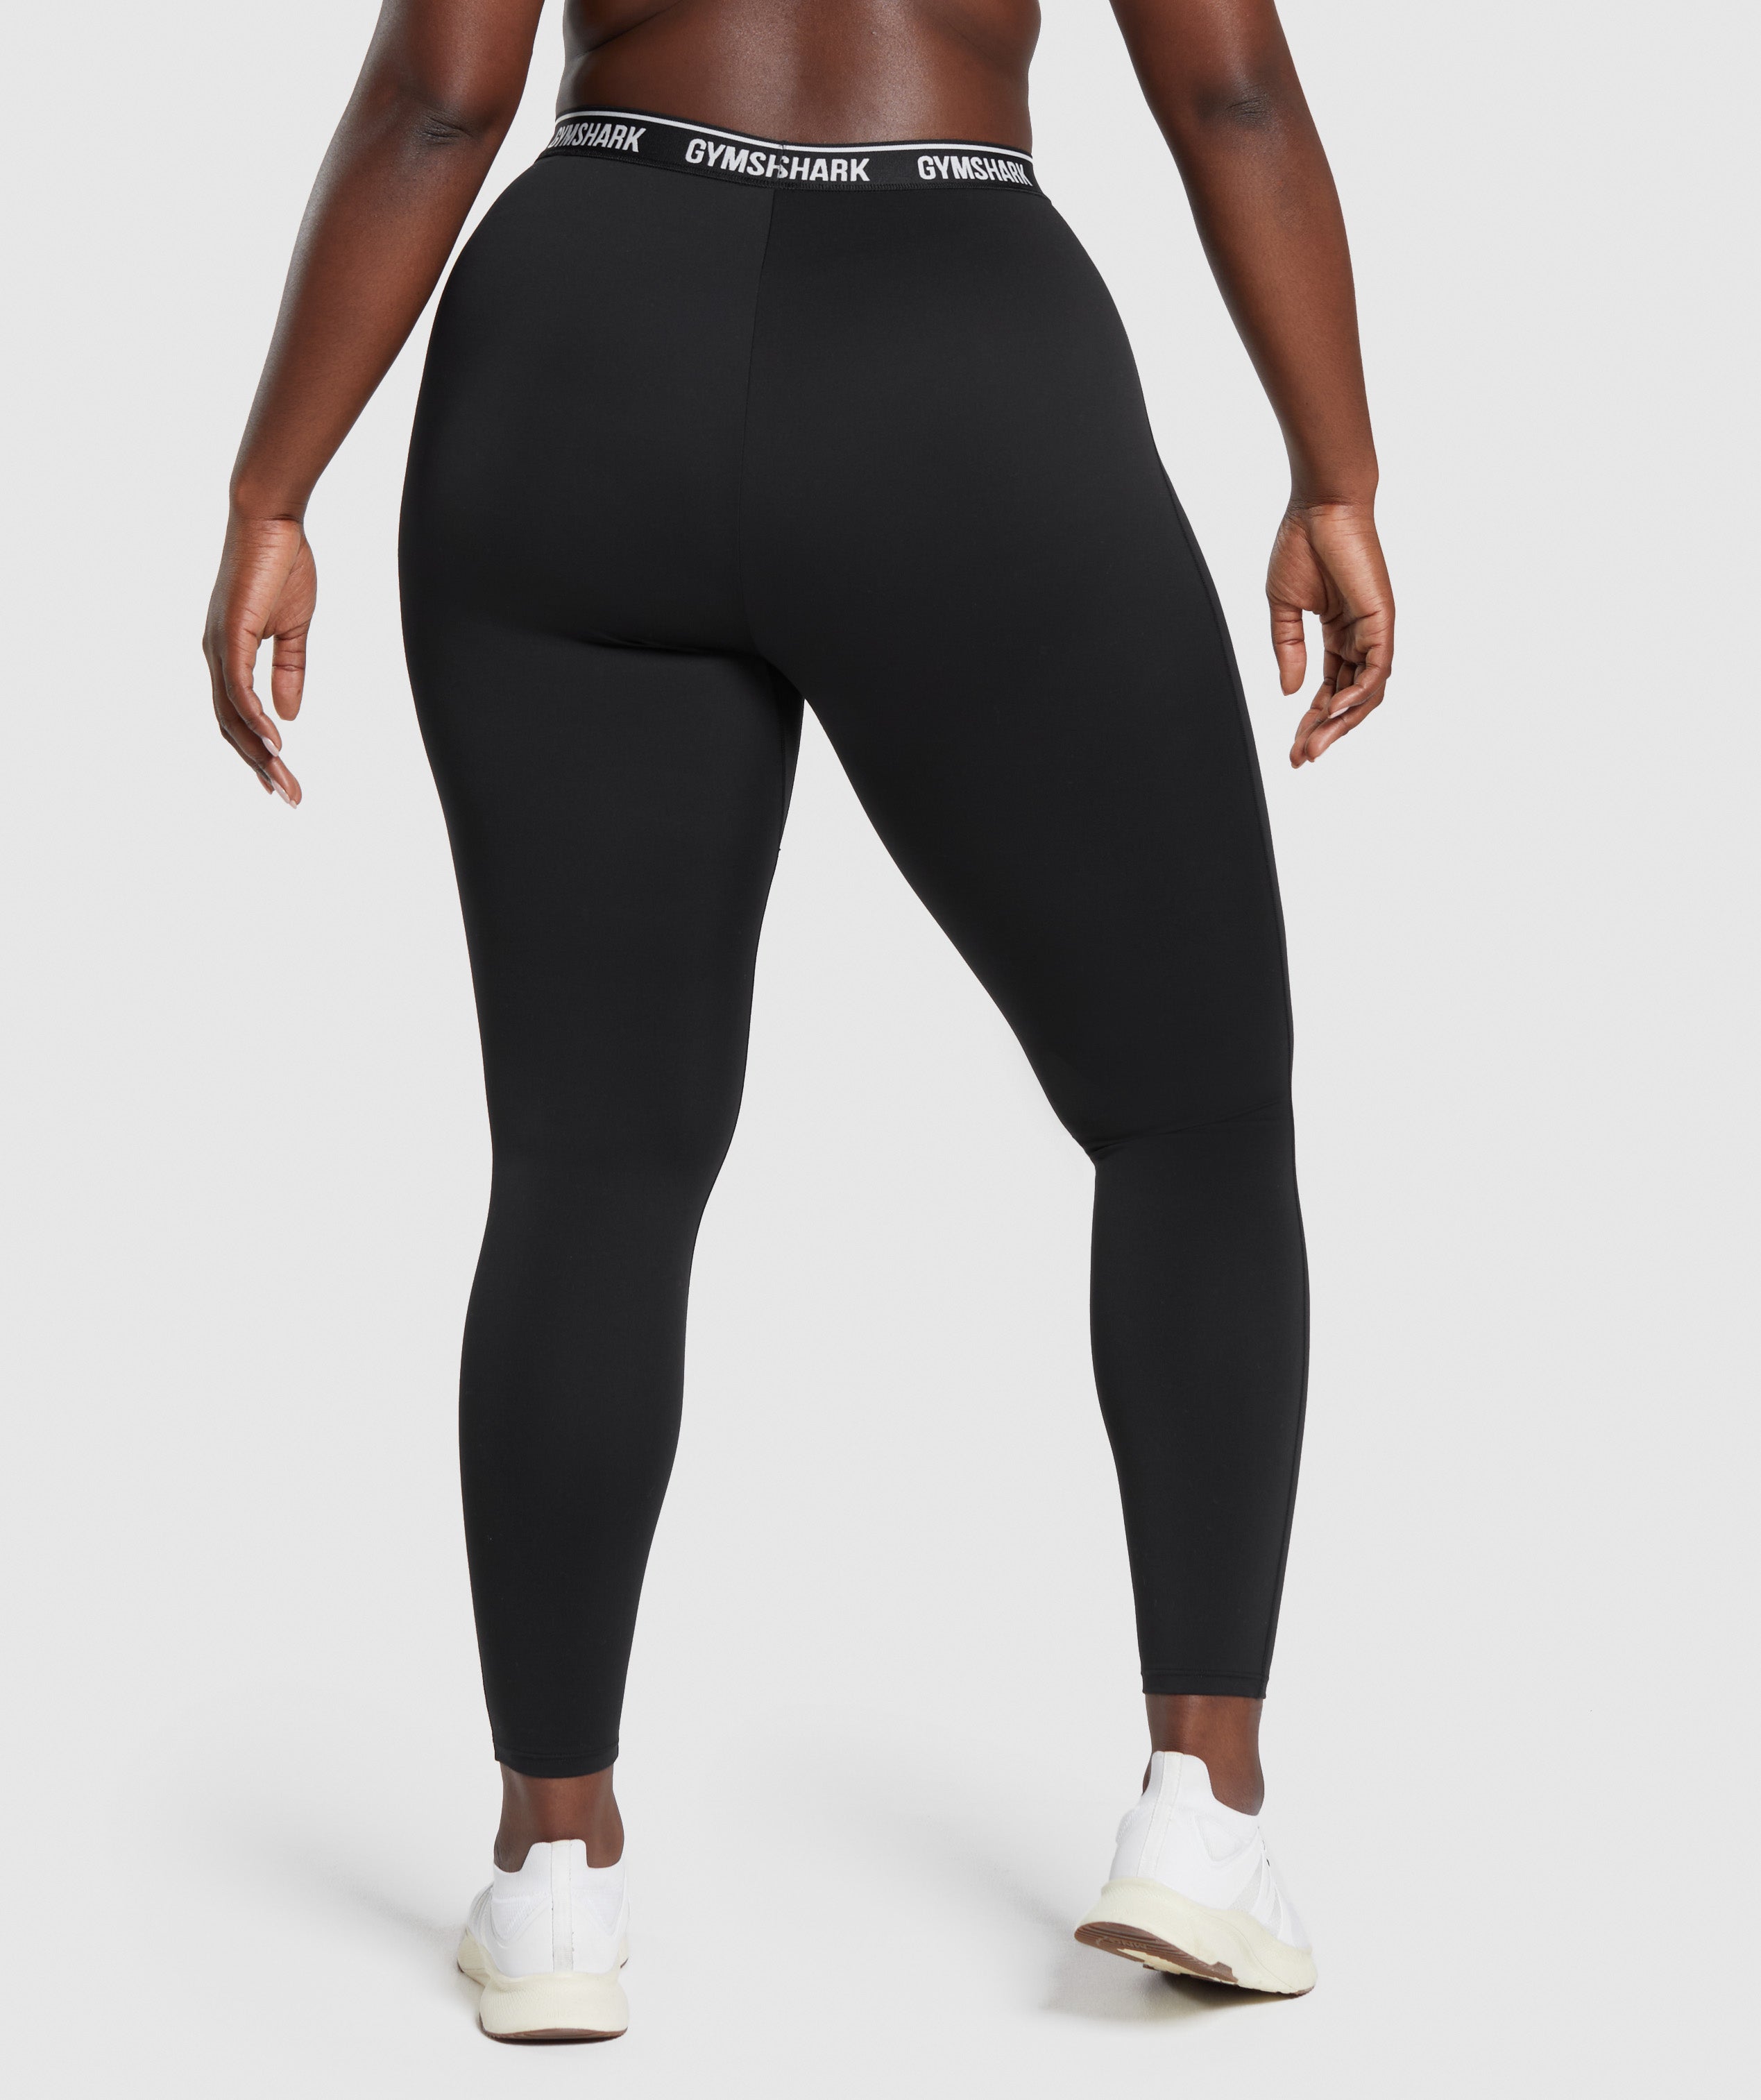 Gymshark Speed Leggings Black Size M - $40 (11% Off Retail) - From Sydney